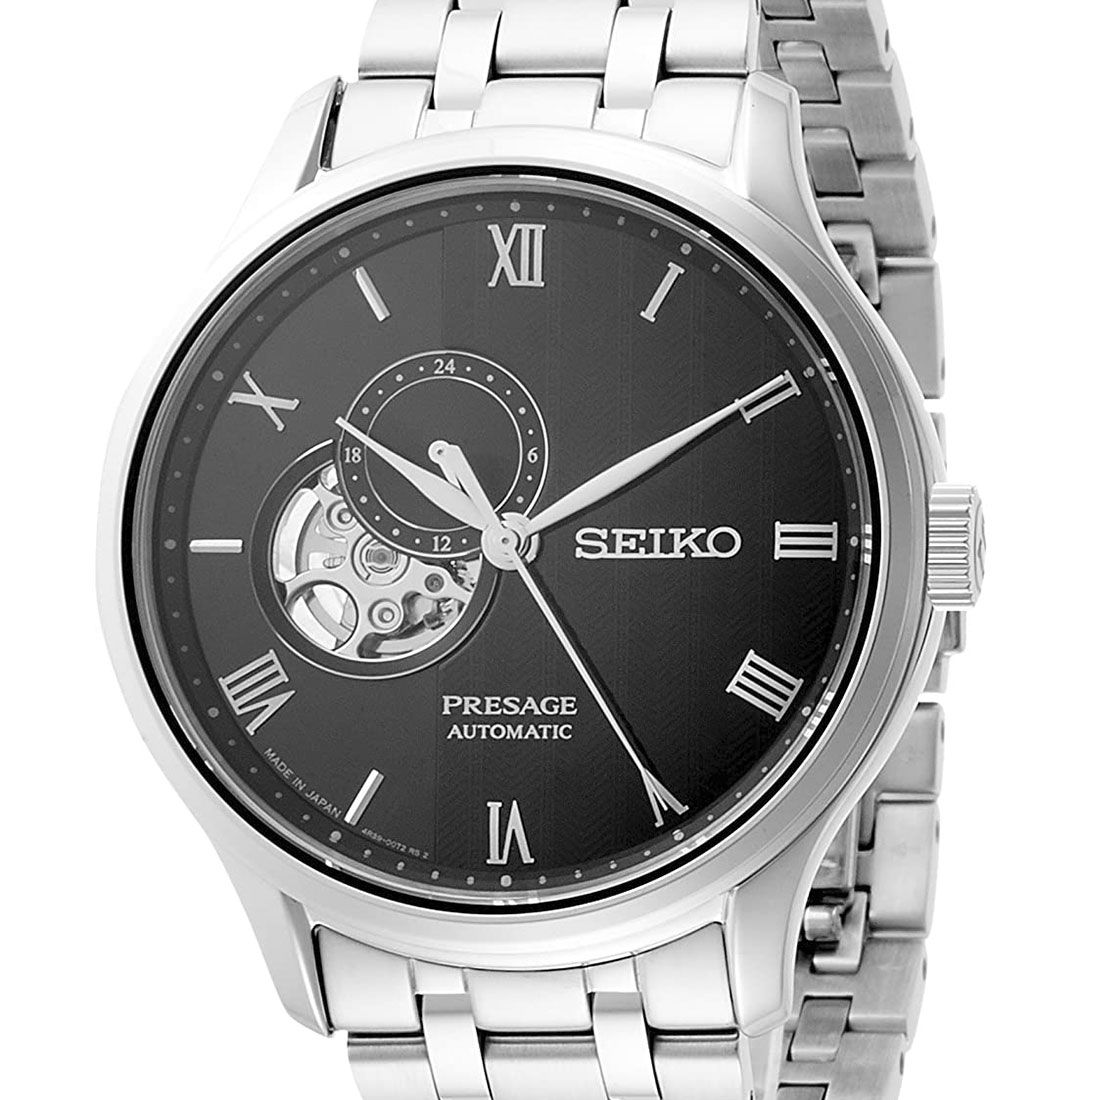 Seiko Presage Automatic Black Dial JDM Watch SARY093 -Seiko